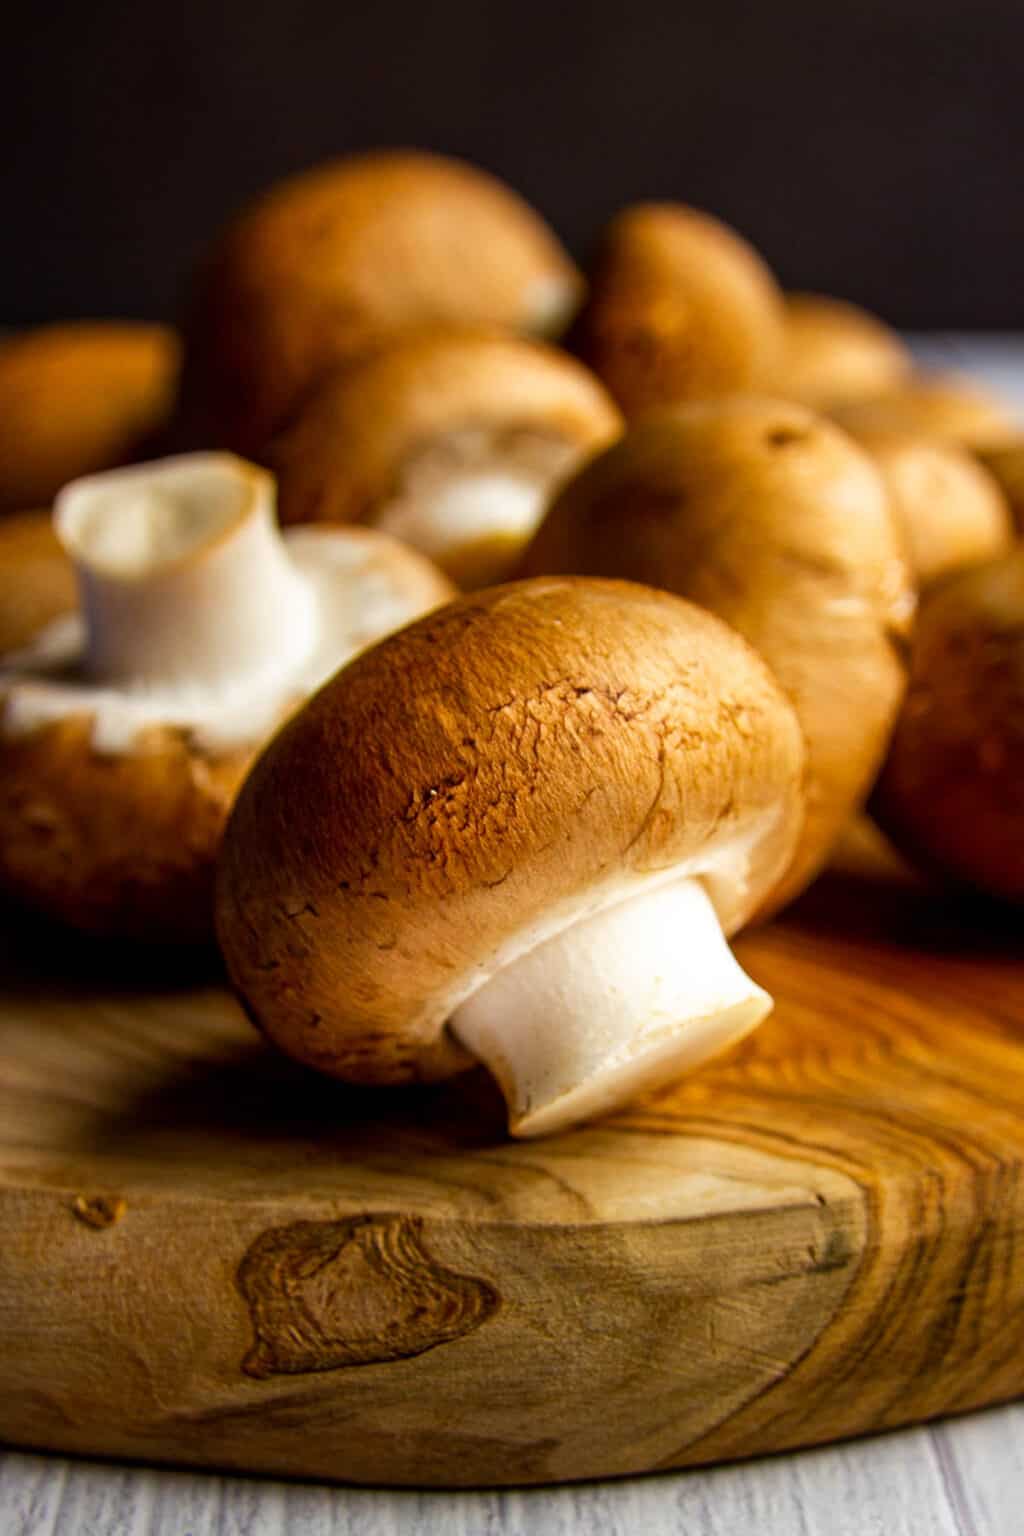 The Chestnut Mushrooms Ultimate Guide (Plus Recipe!)